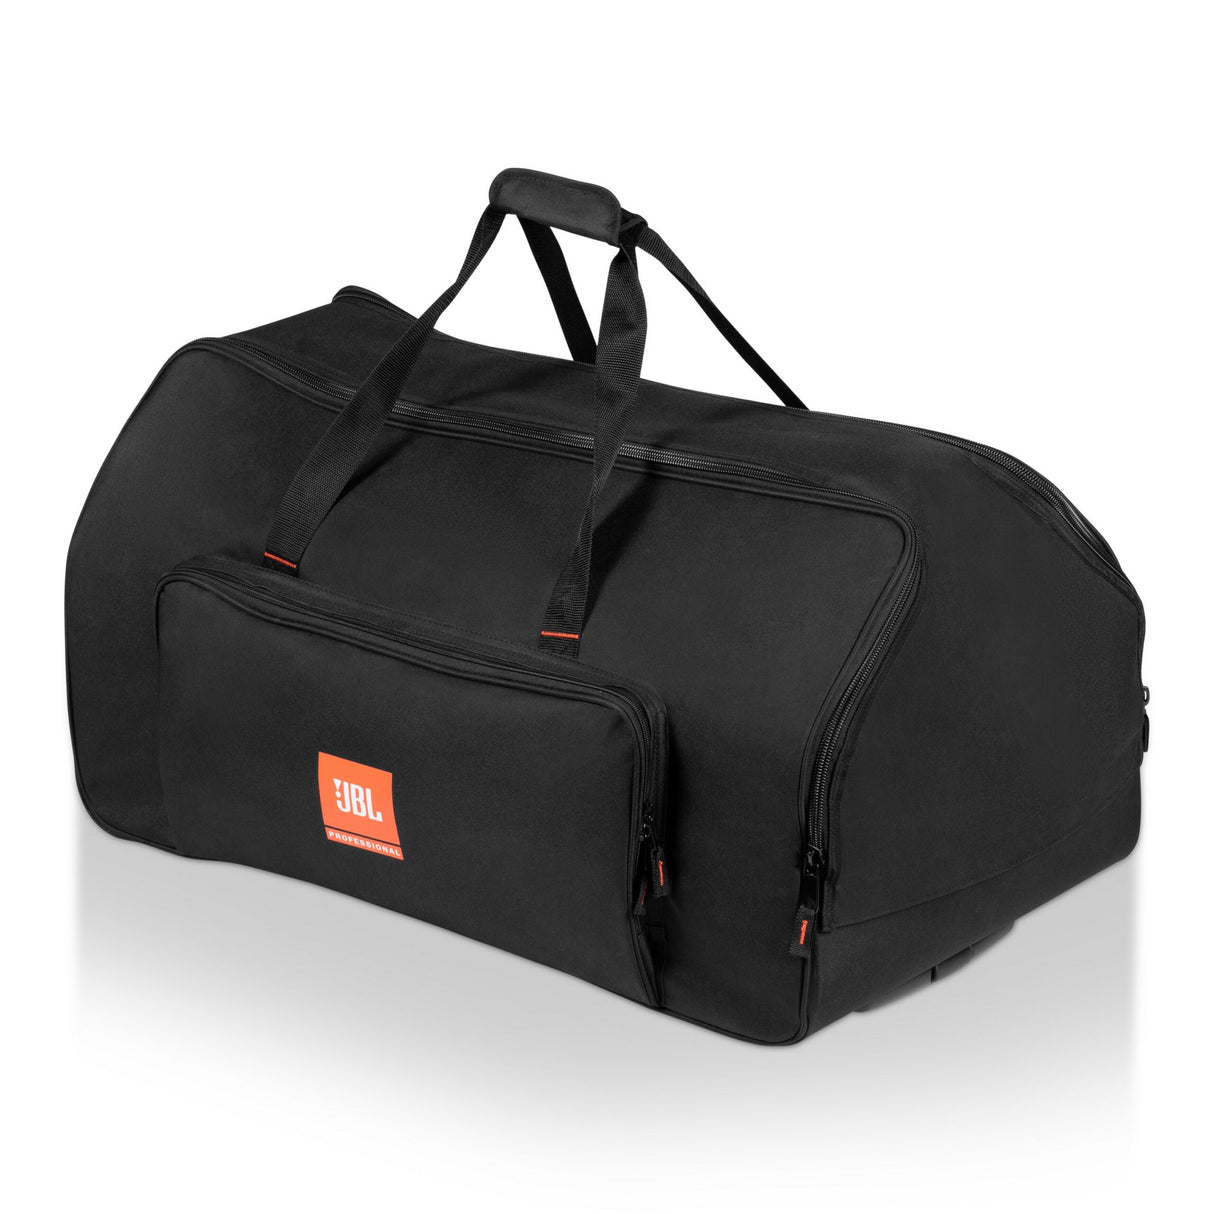 JBL EON715-BAG-W Tote Bag with Wheels for EON715 Speaker